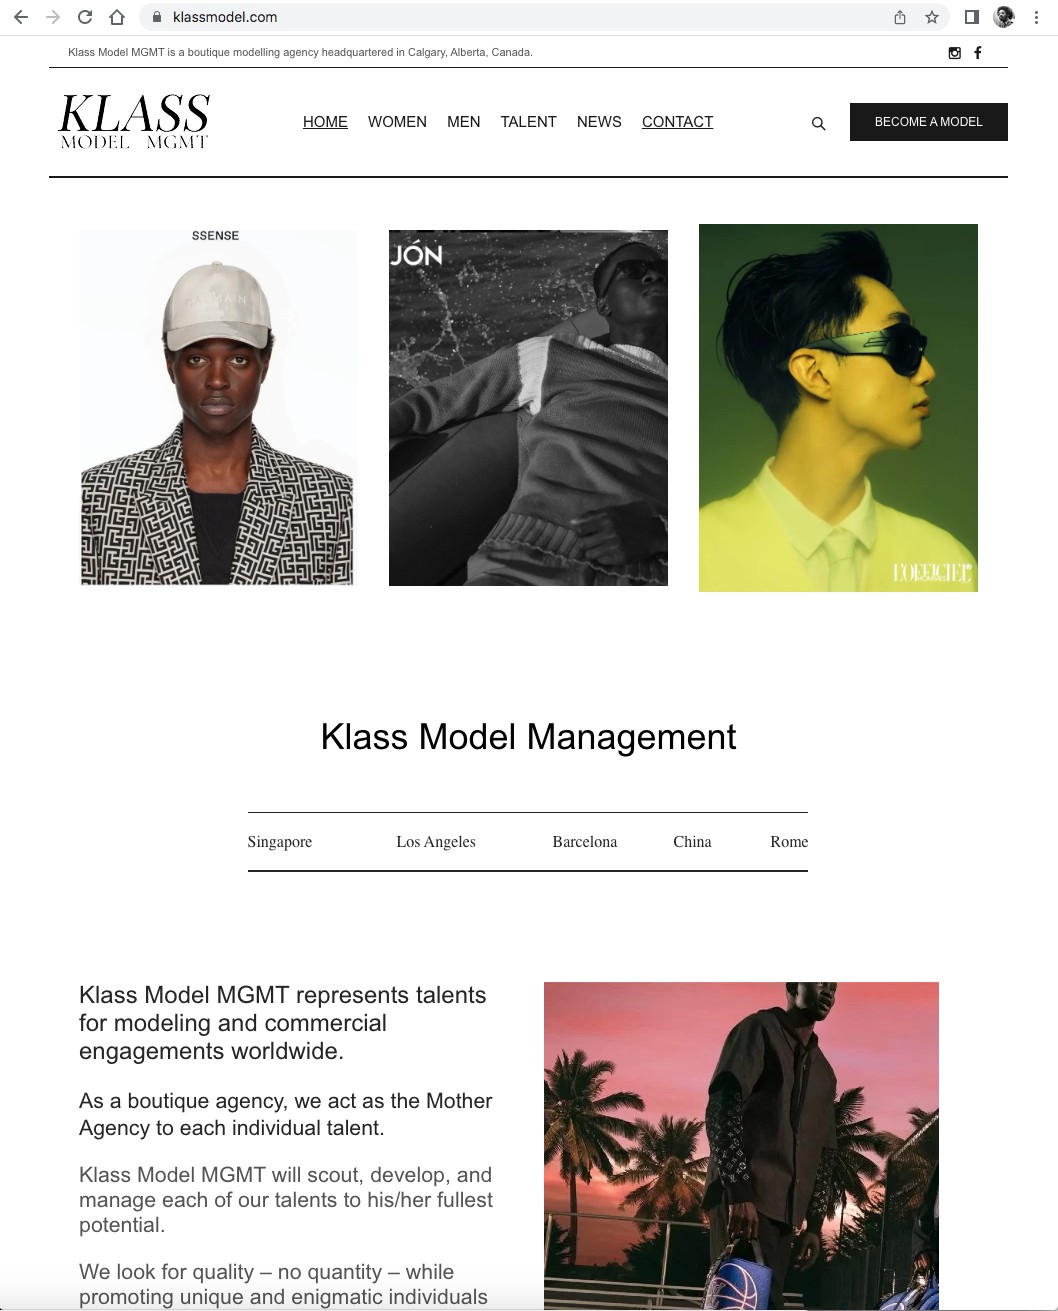 Klass Models Management